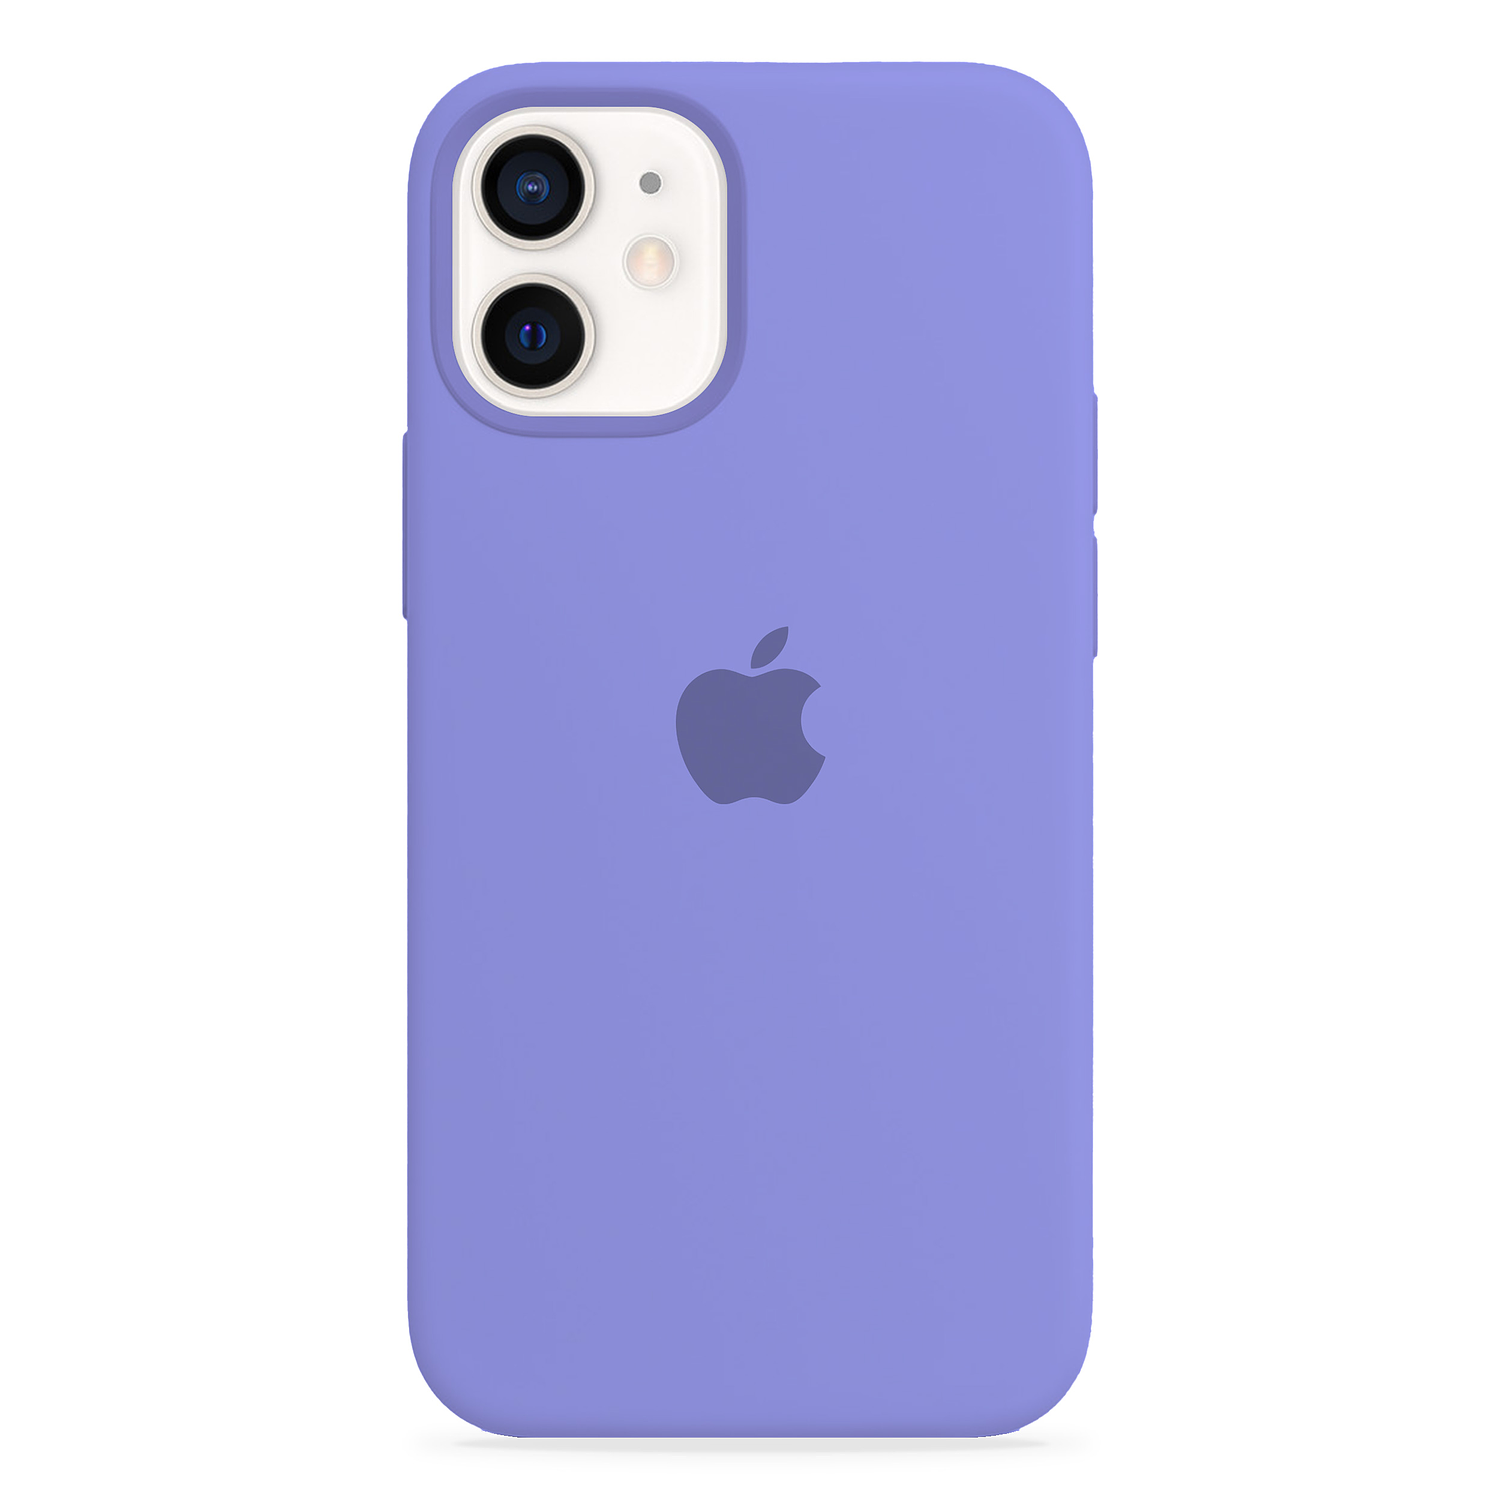 Carcasa de Silicona - iPhone 12 Mini 5